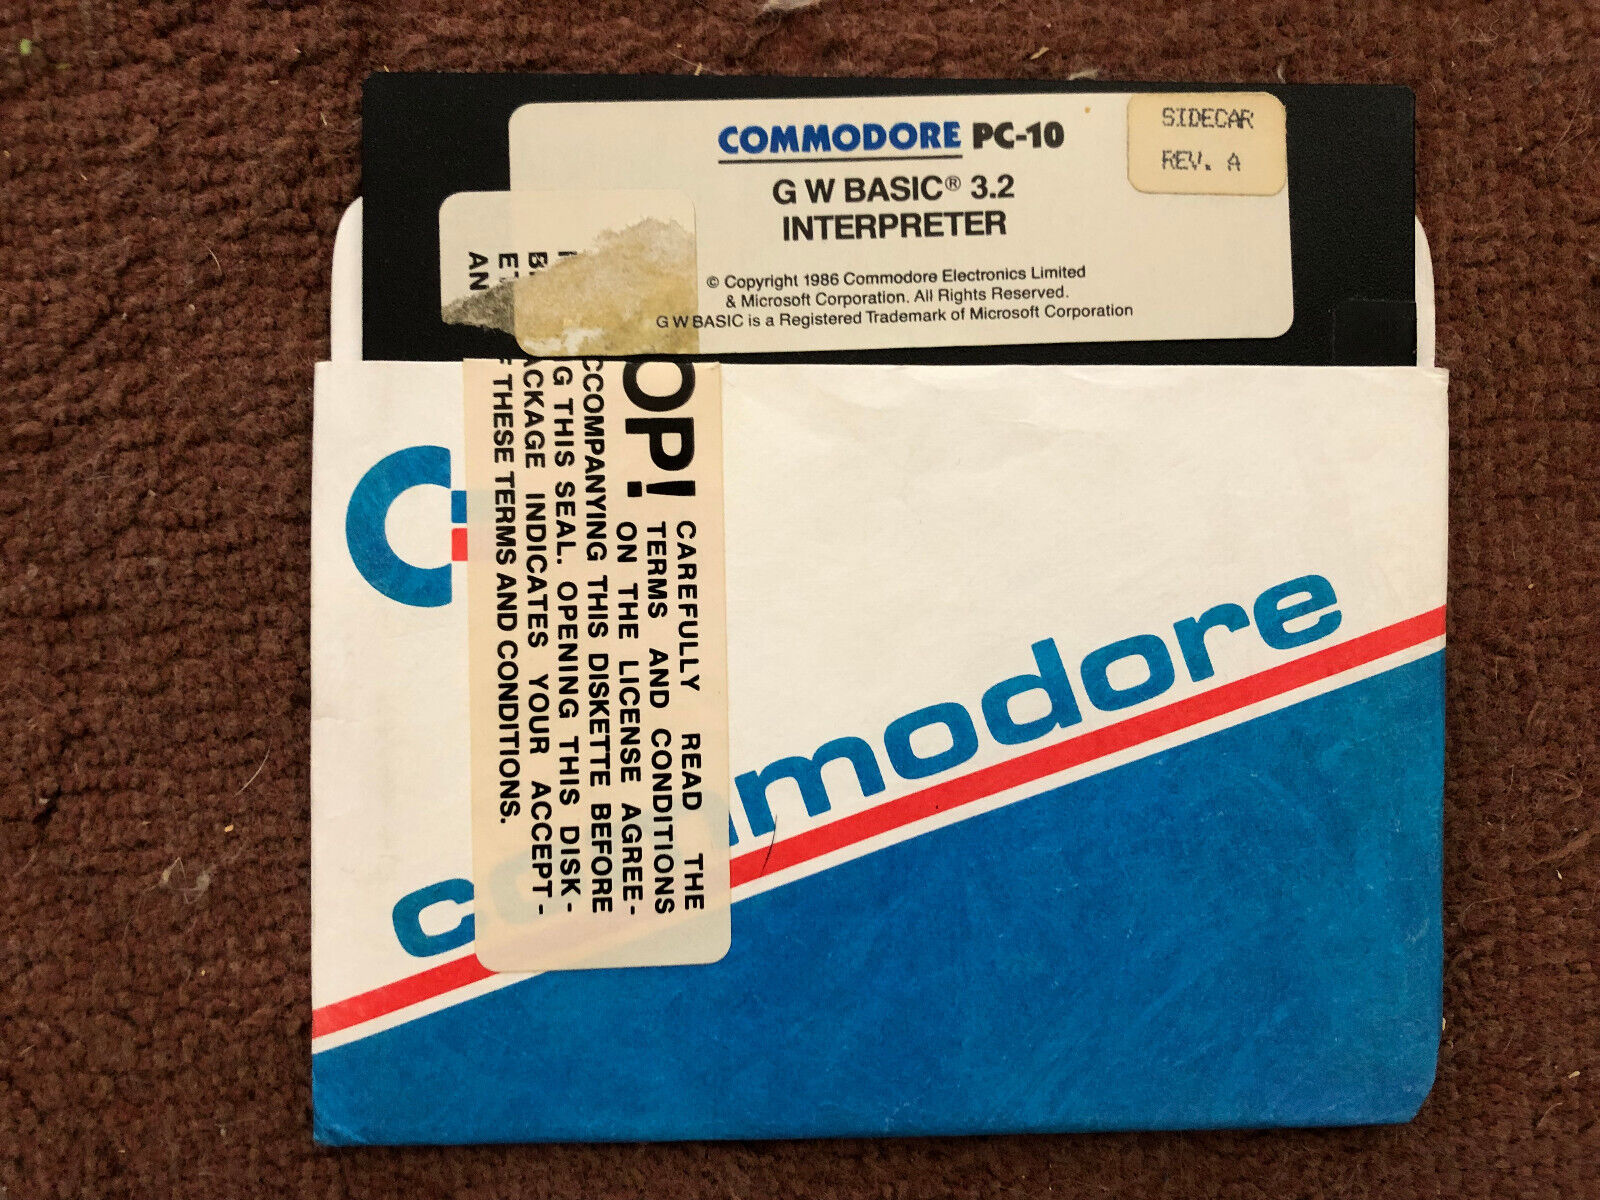 Commodore 64 - 128 -PC-10 G W Basic 3.2 on  5.25 Disk - Original